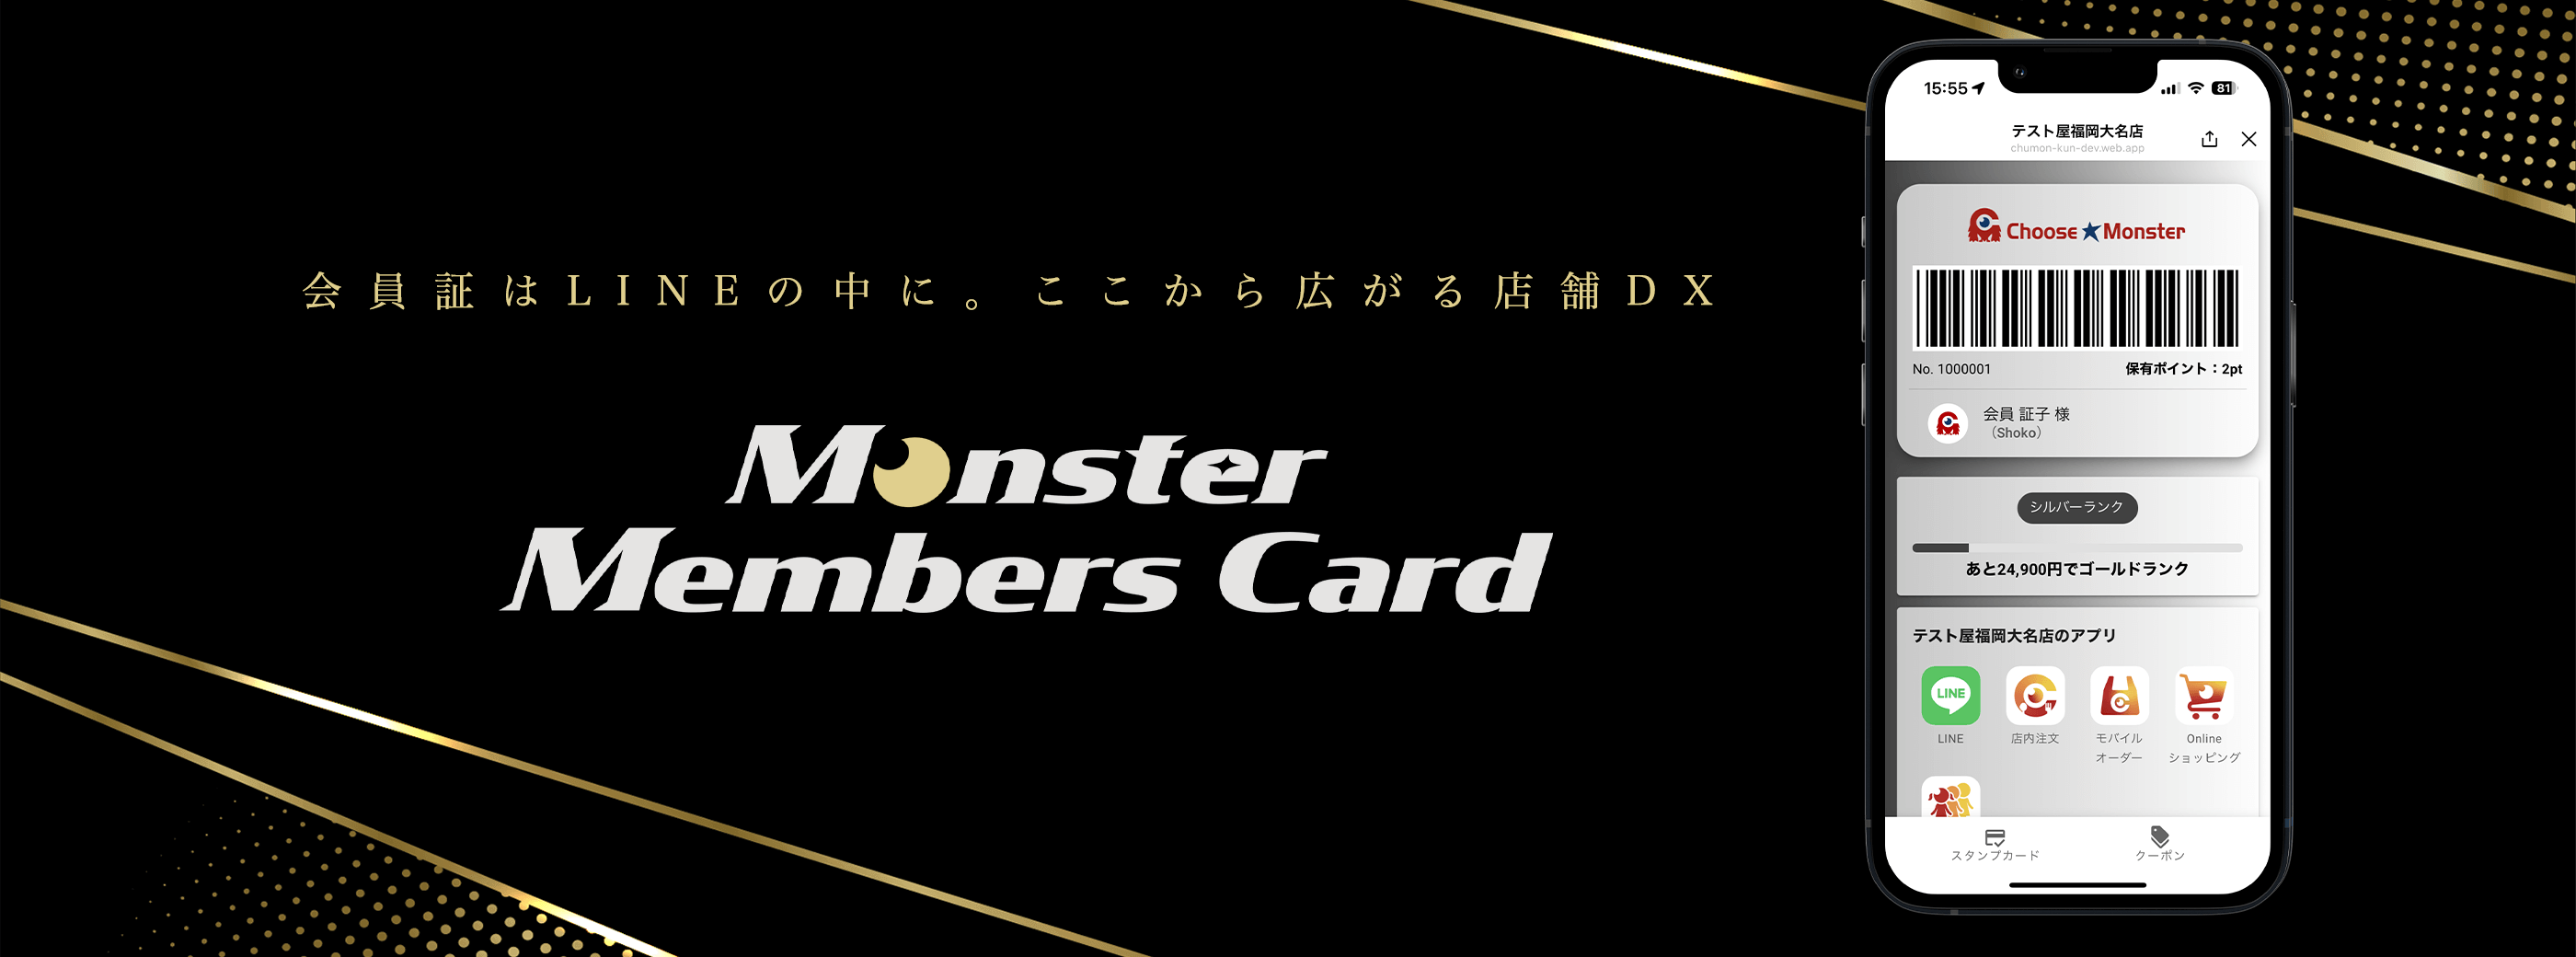 Monster-メンバーズカード